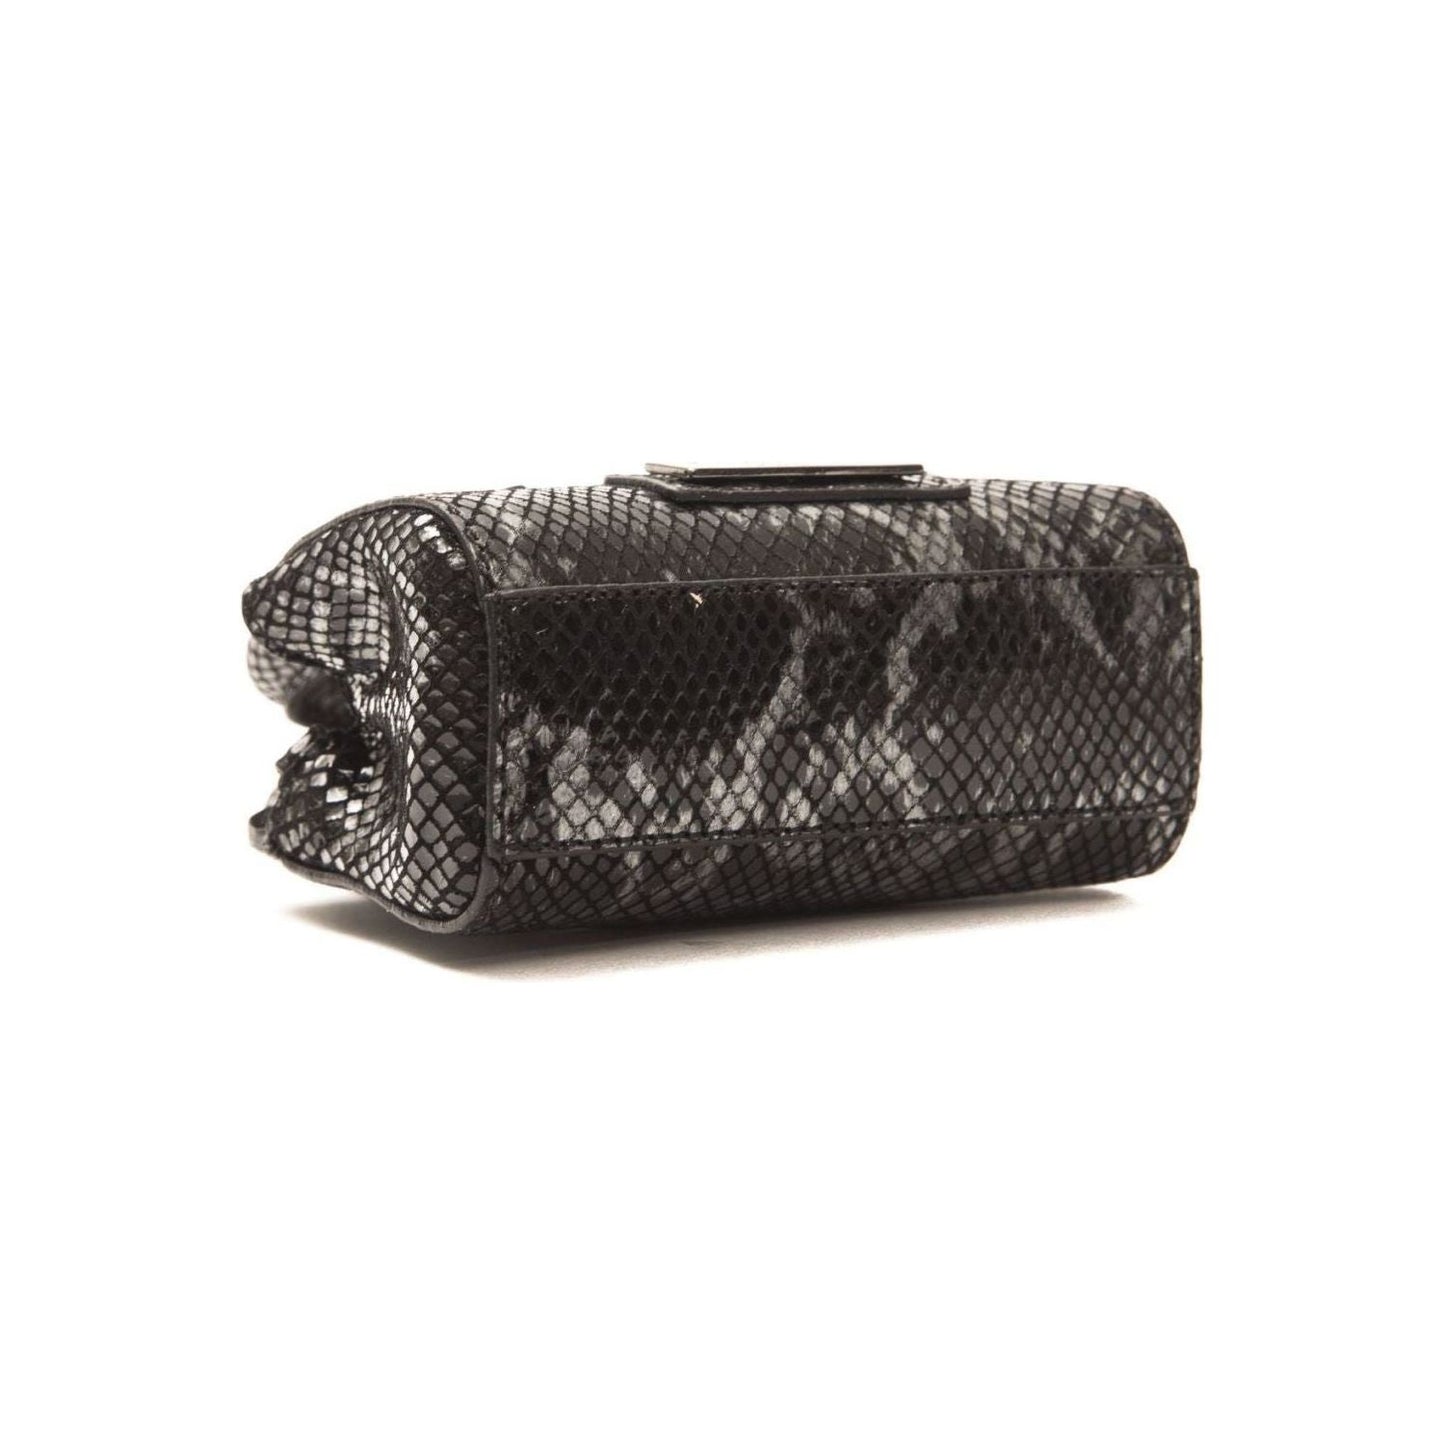 Pompei Donatella Chic Leather Mini Tote with Python Print gray-leather-mini-handbag stock_product_image_5783_343197283-31-scaled-92fde6c2-b18.jpg